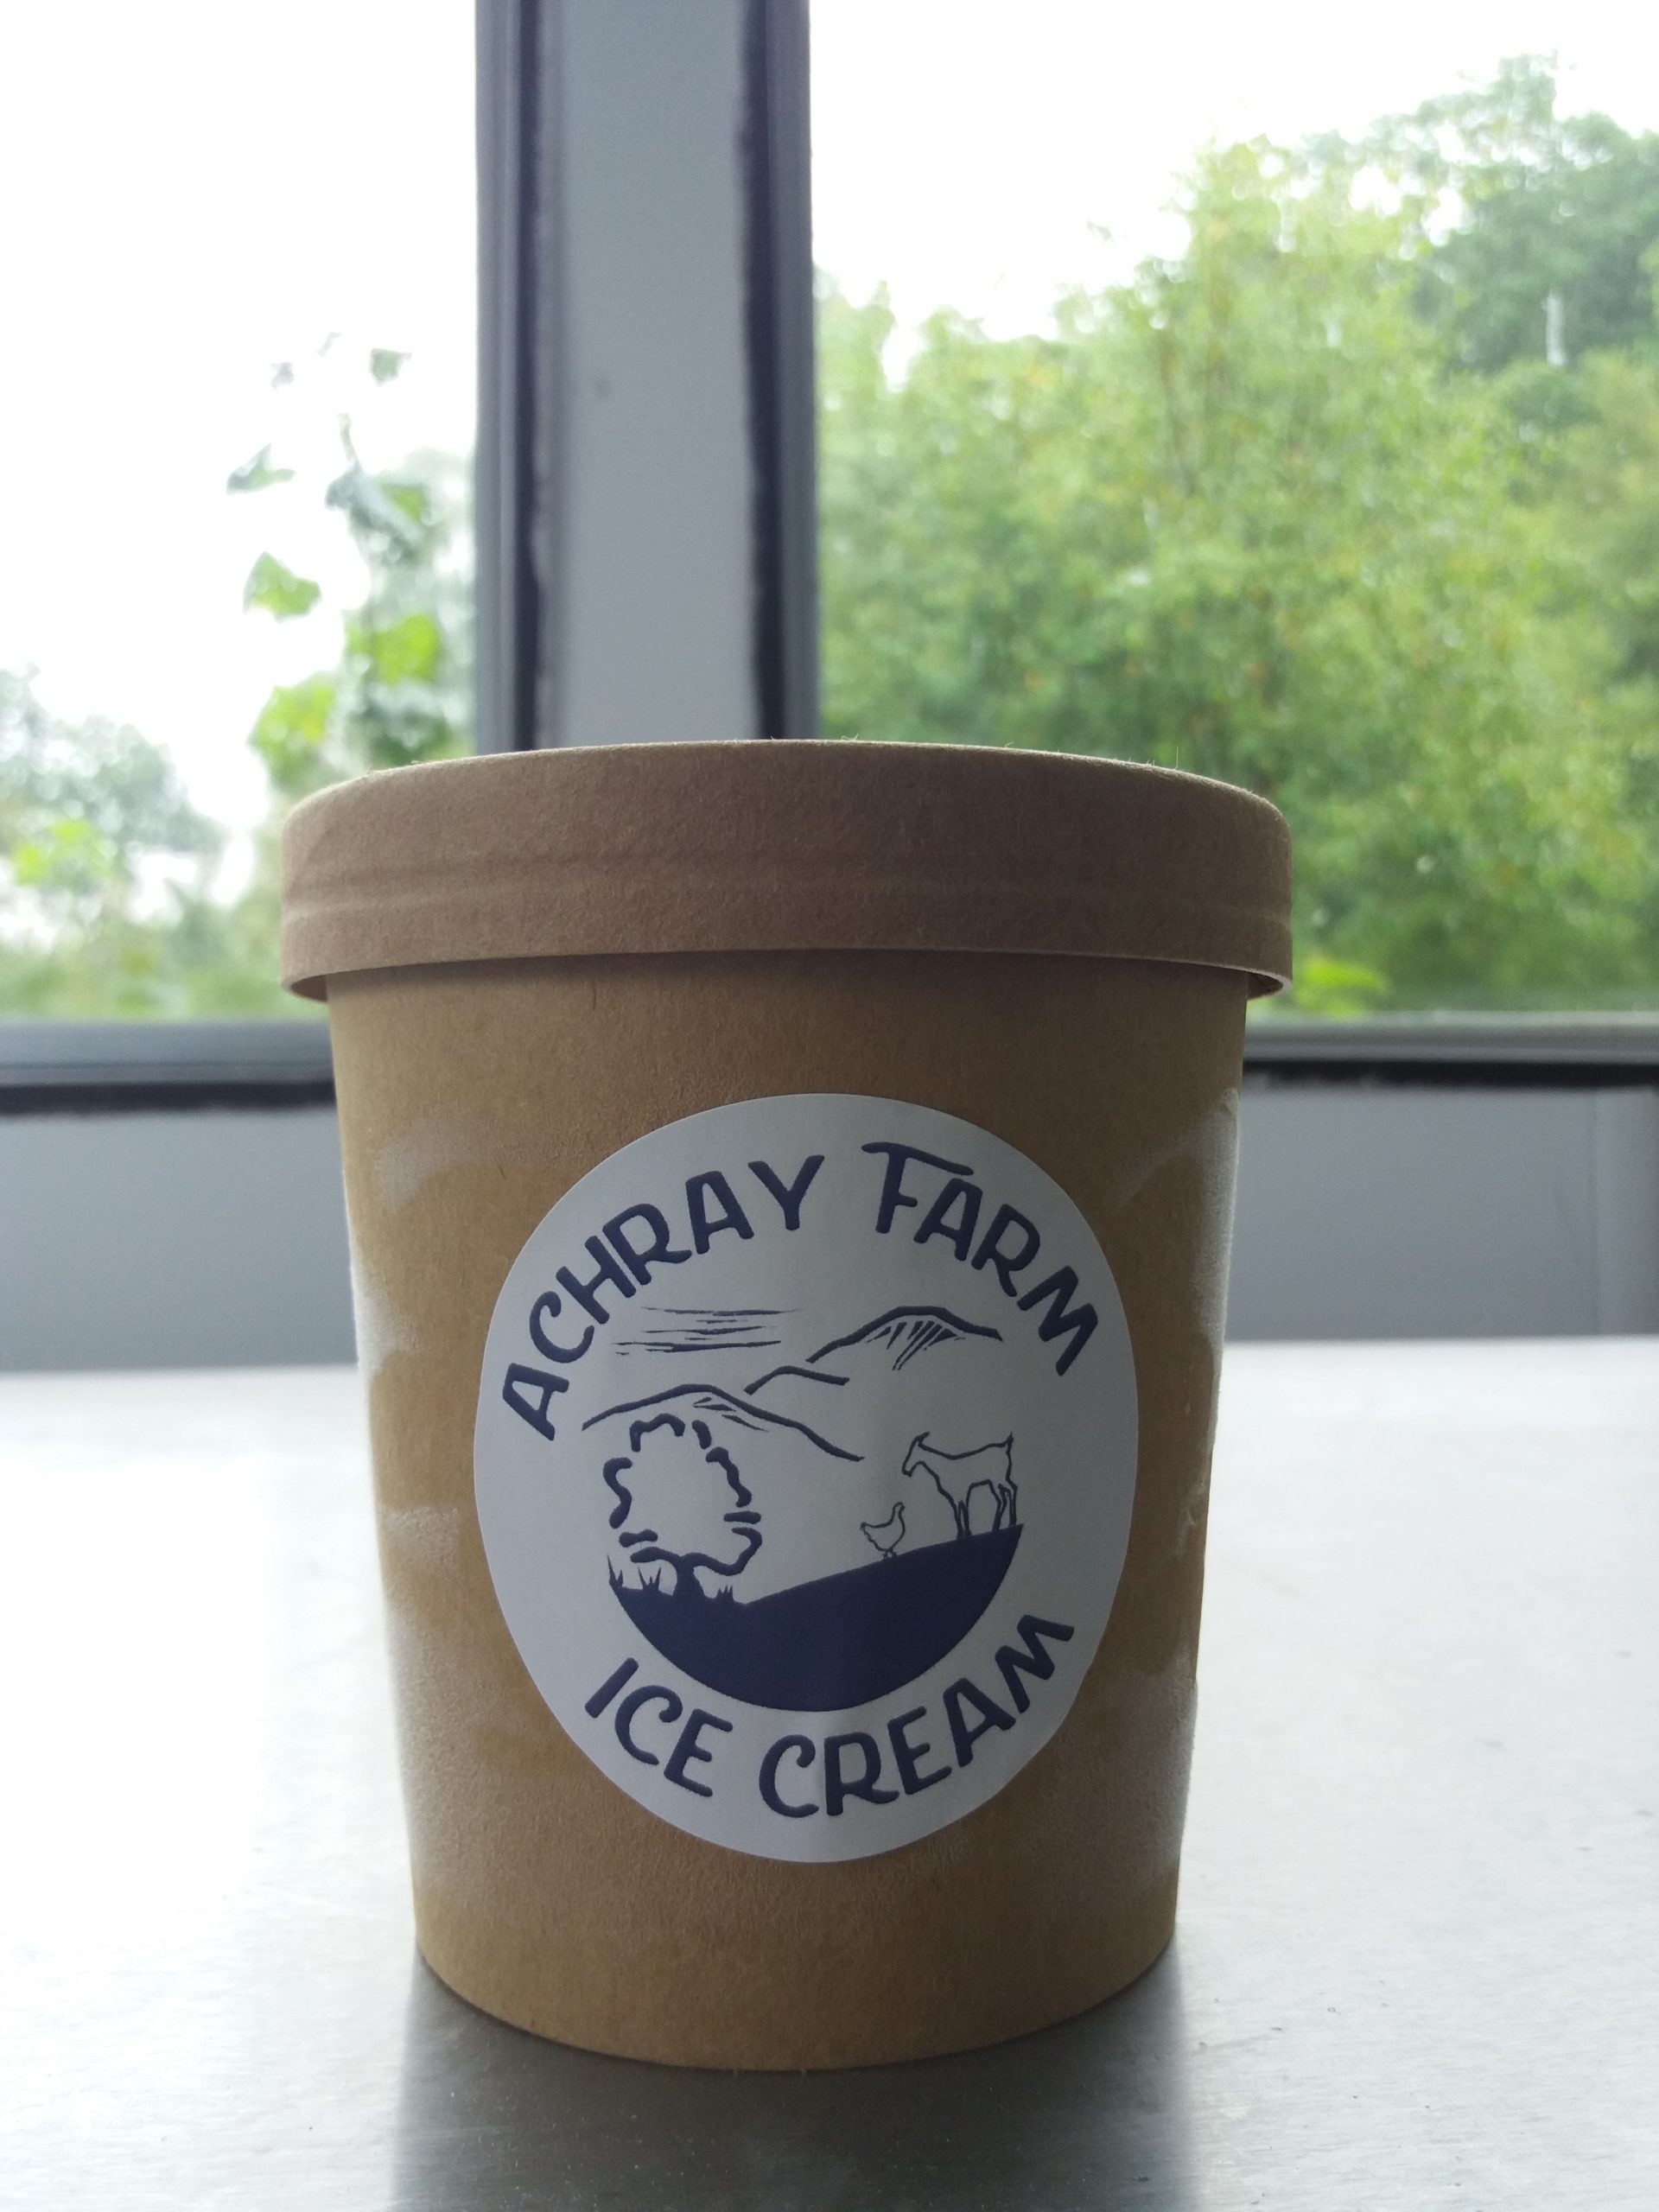 Achray Farm Ice Cream